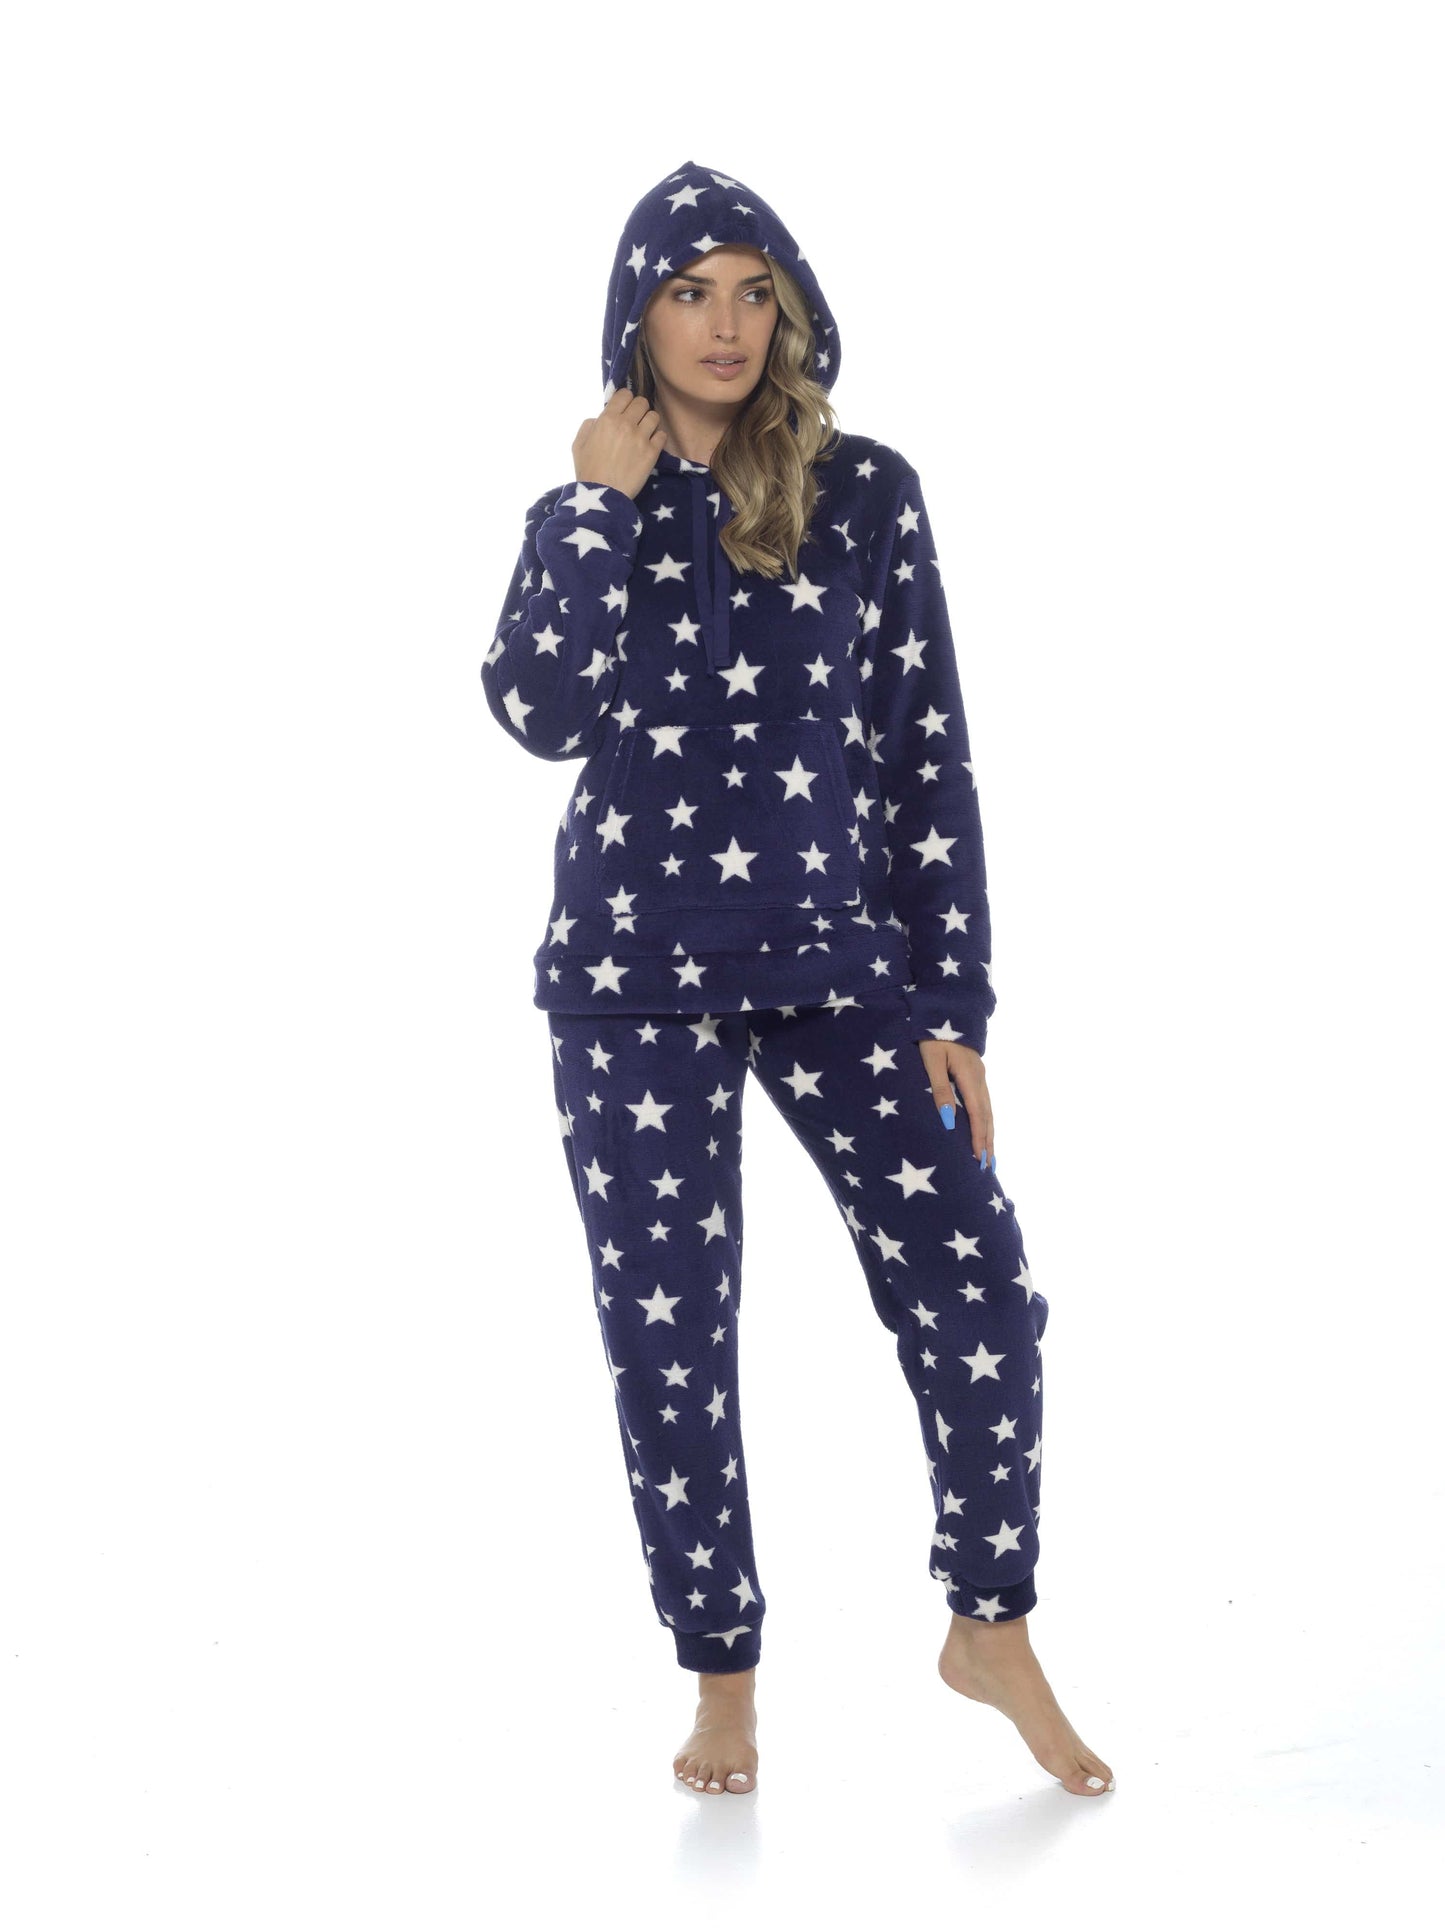 Stars Plush Fleece Hooded Pyjama Set SMALL | UK 8-10 / NAVY Daisy Dreamer Pyjamas